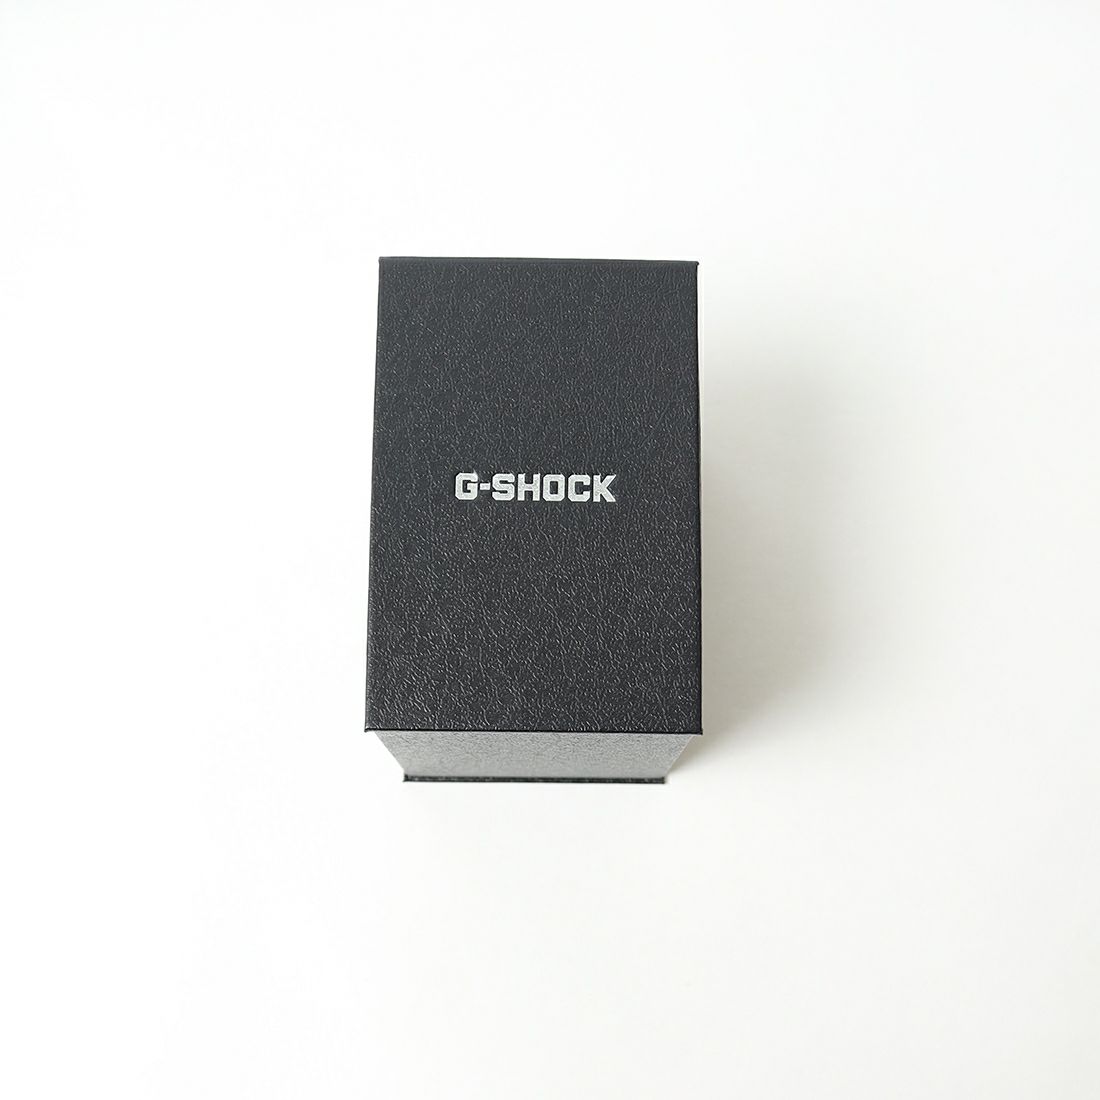 G-SHOCK [ジーショック] デジタルウォッチ [GW-M5610U-1JF] BLACK